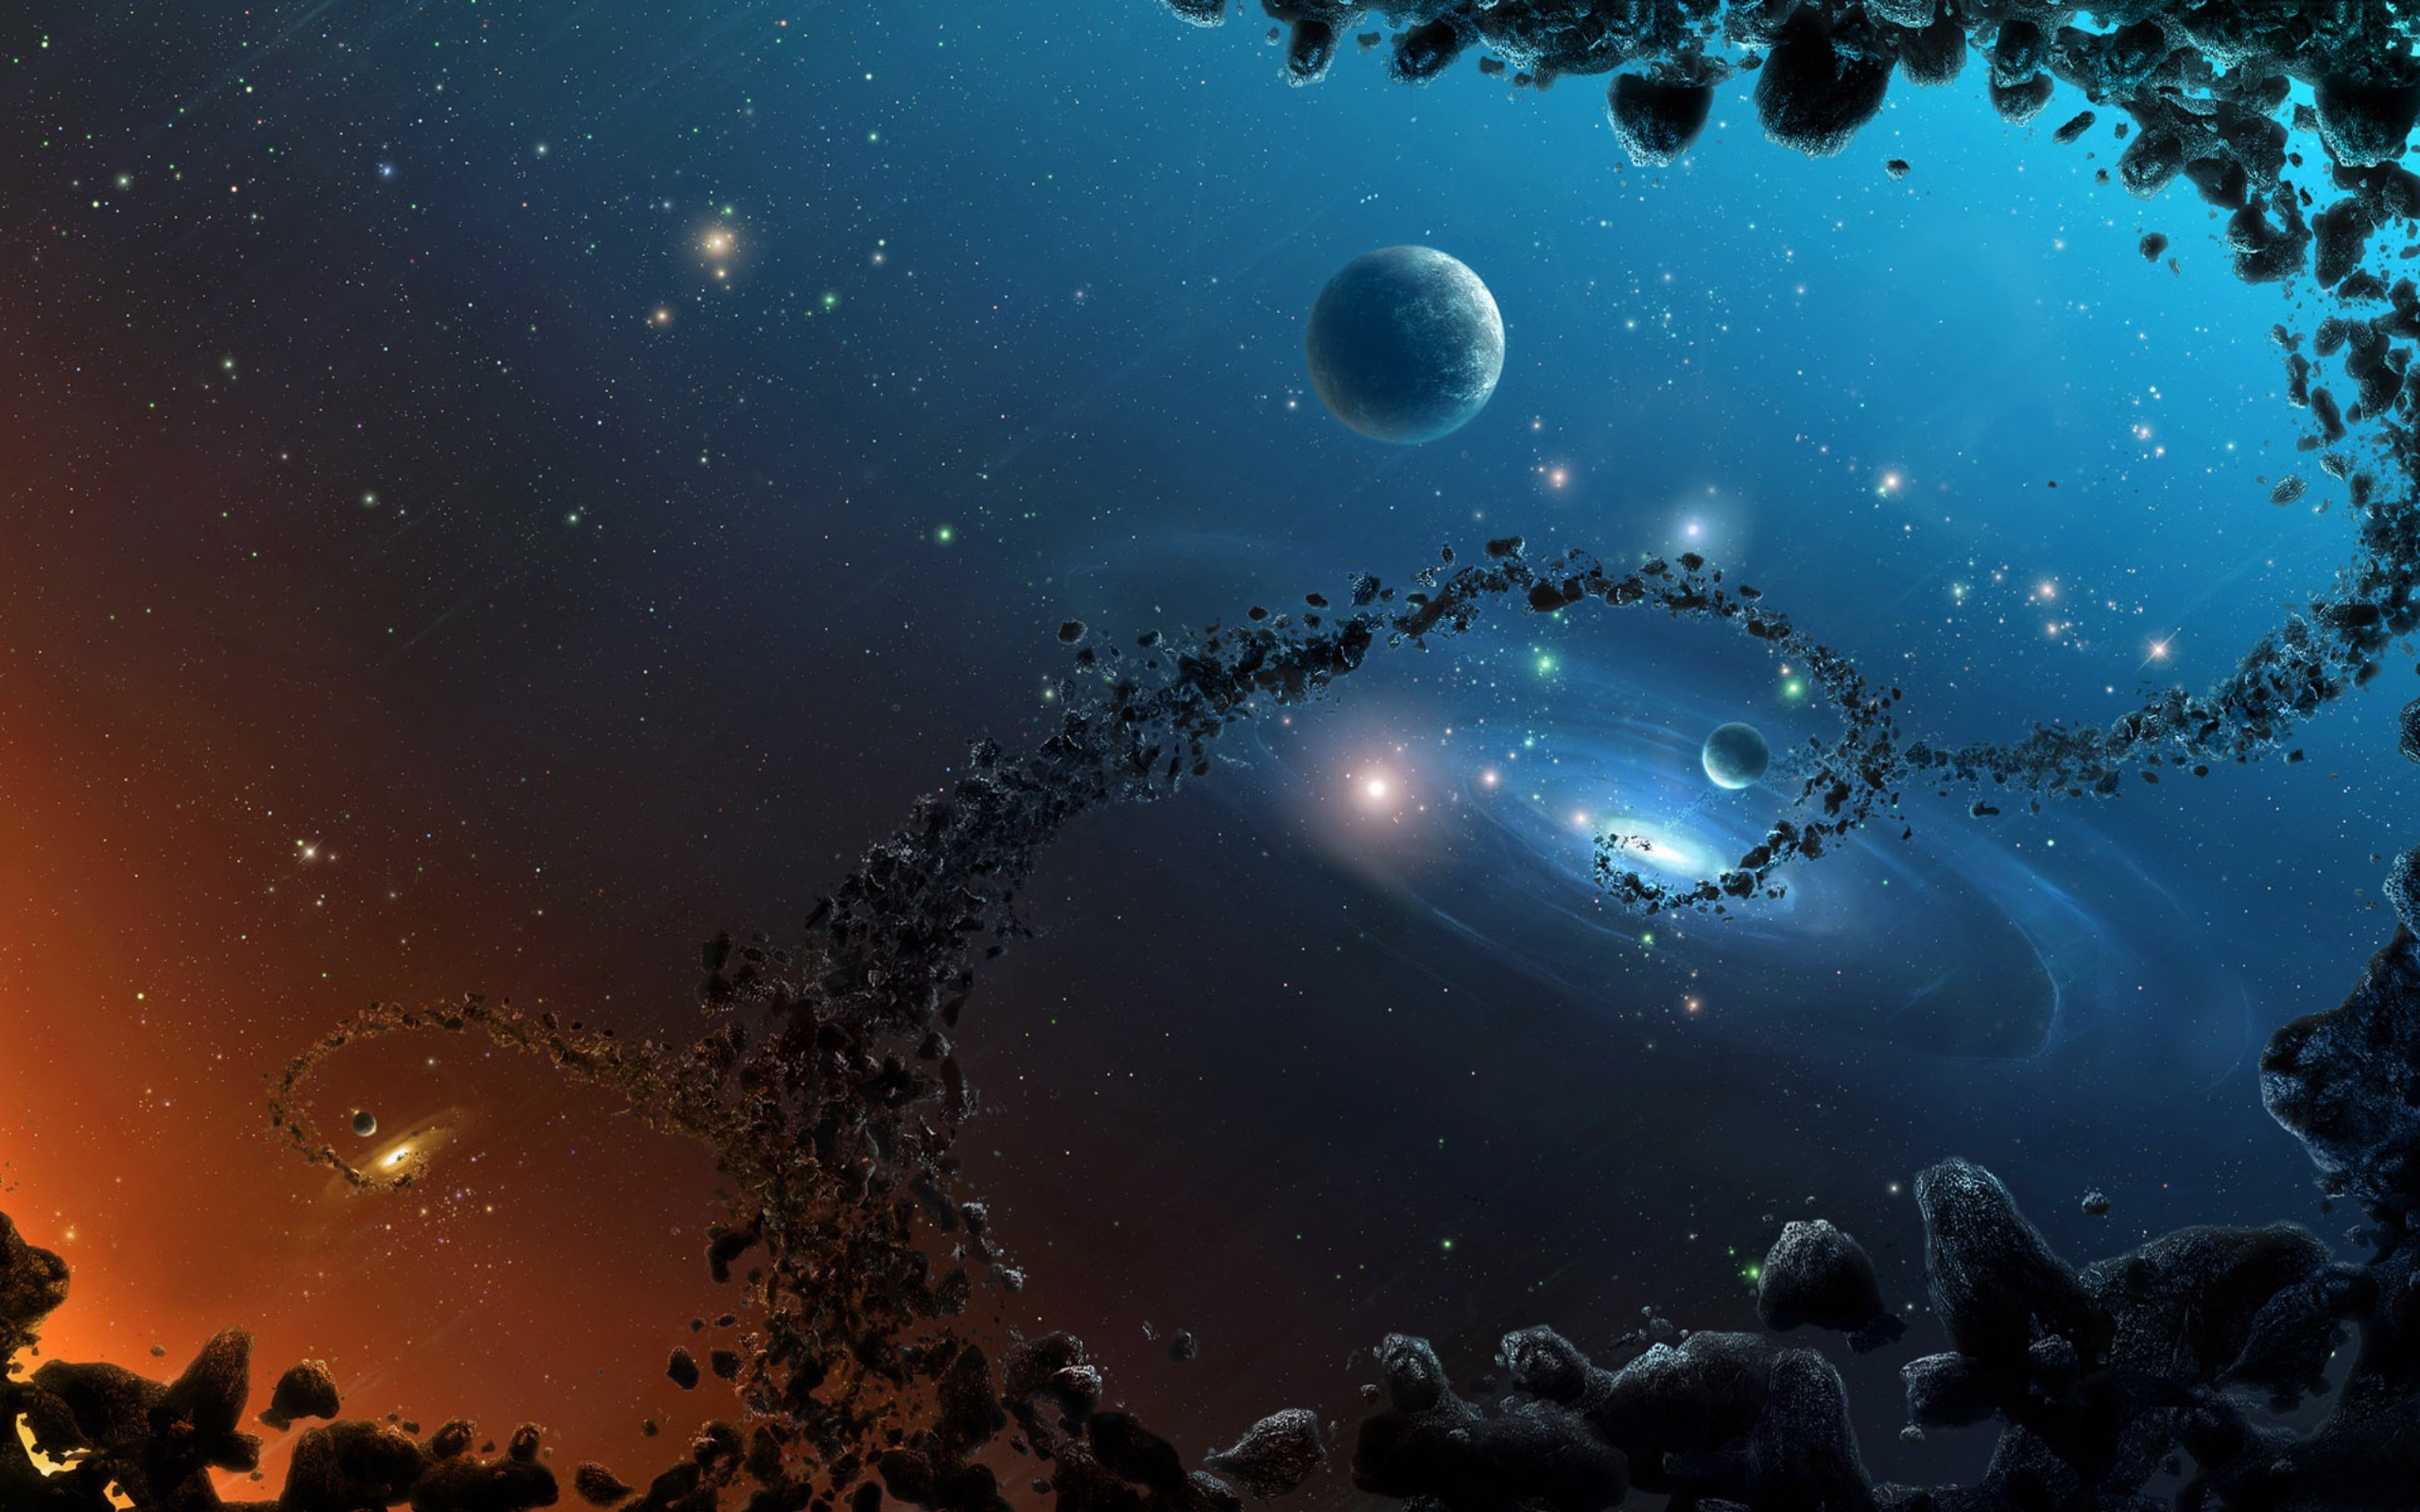 Другая заставка. Galaxy. Звезды фотообои 1280х1024. Фон Жемчужная Планета. Chilldreamer - Mirage of Deep.